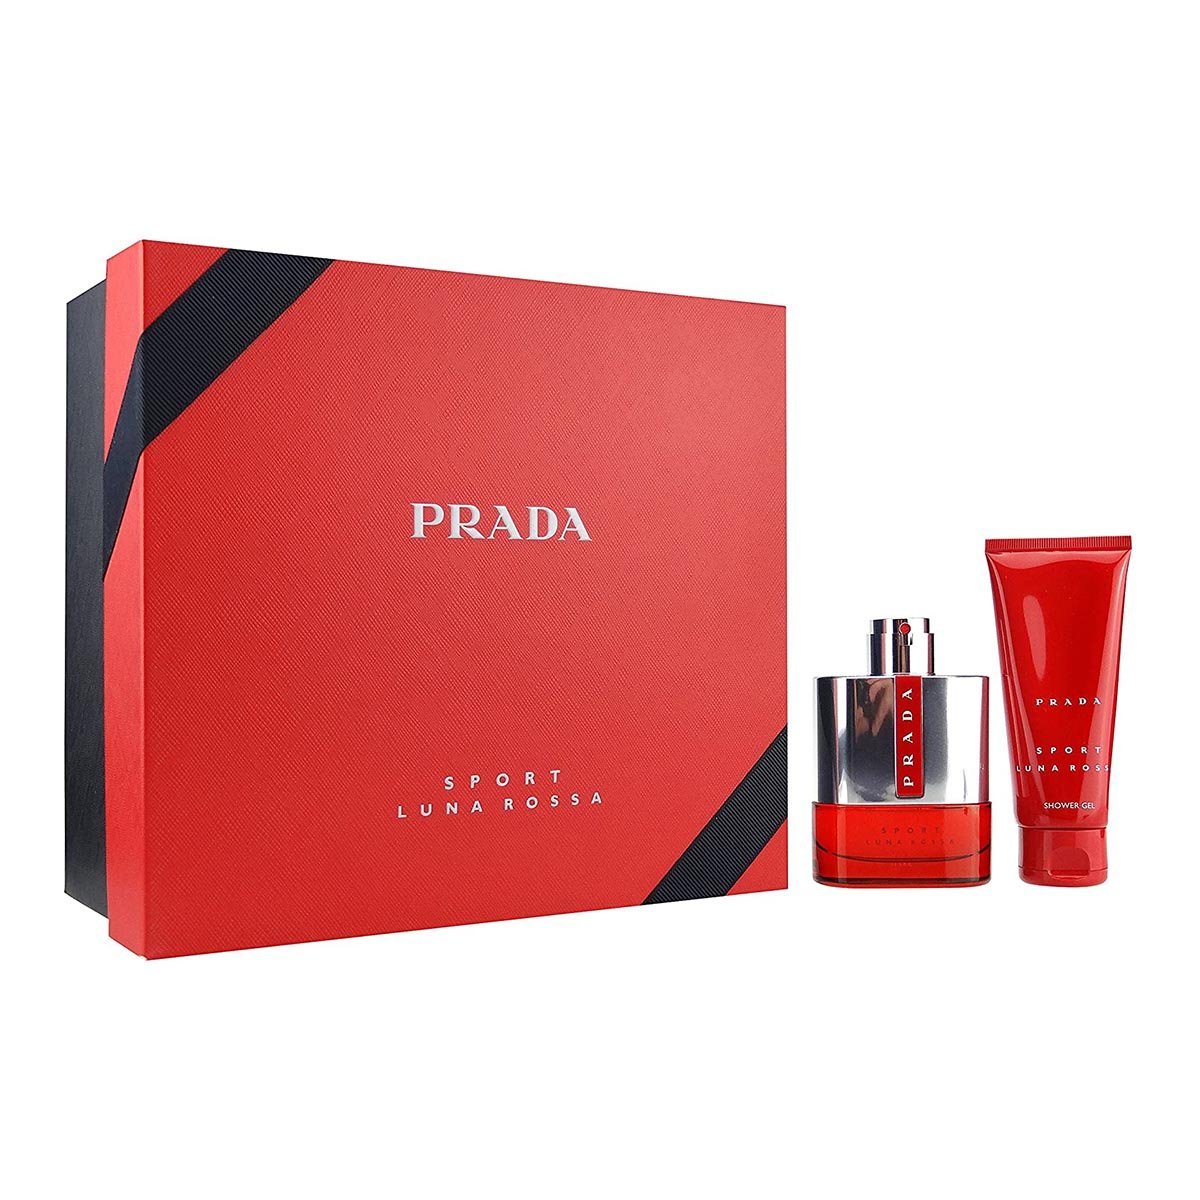 Prada Luna Rossa Sport EDT Gift Set - My Perfume Shop Australia